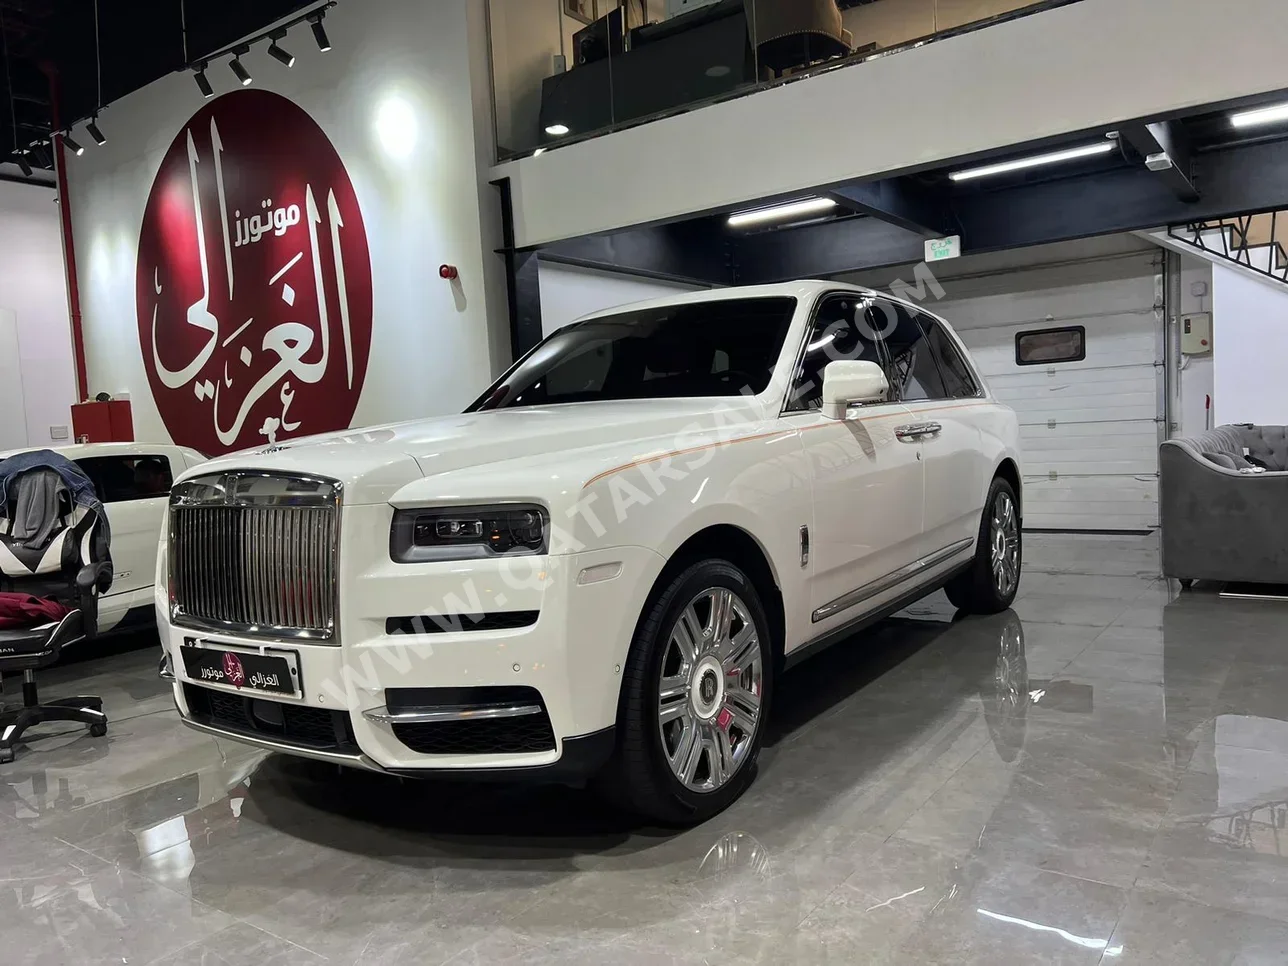 Rolls-Royce  Cullinan  2020  Automatic  8,000 Km  12 Cylinder  Four Wheel Drive (4WD)  SUV  White